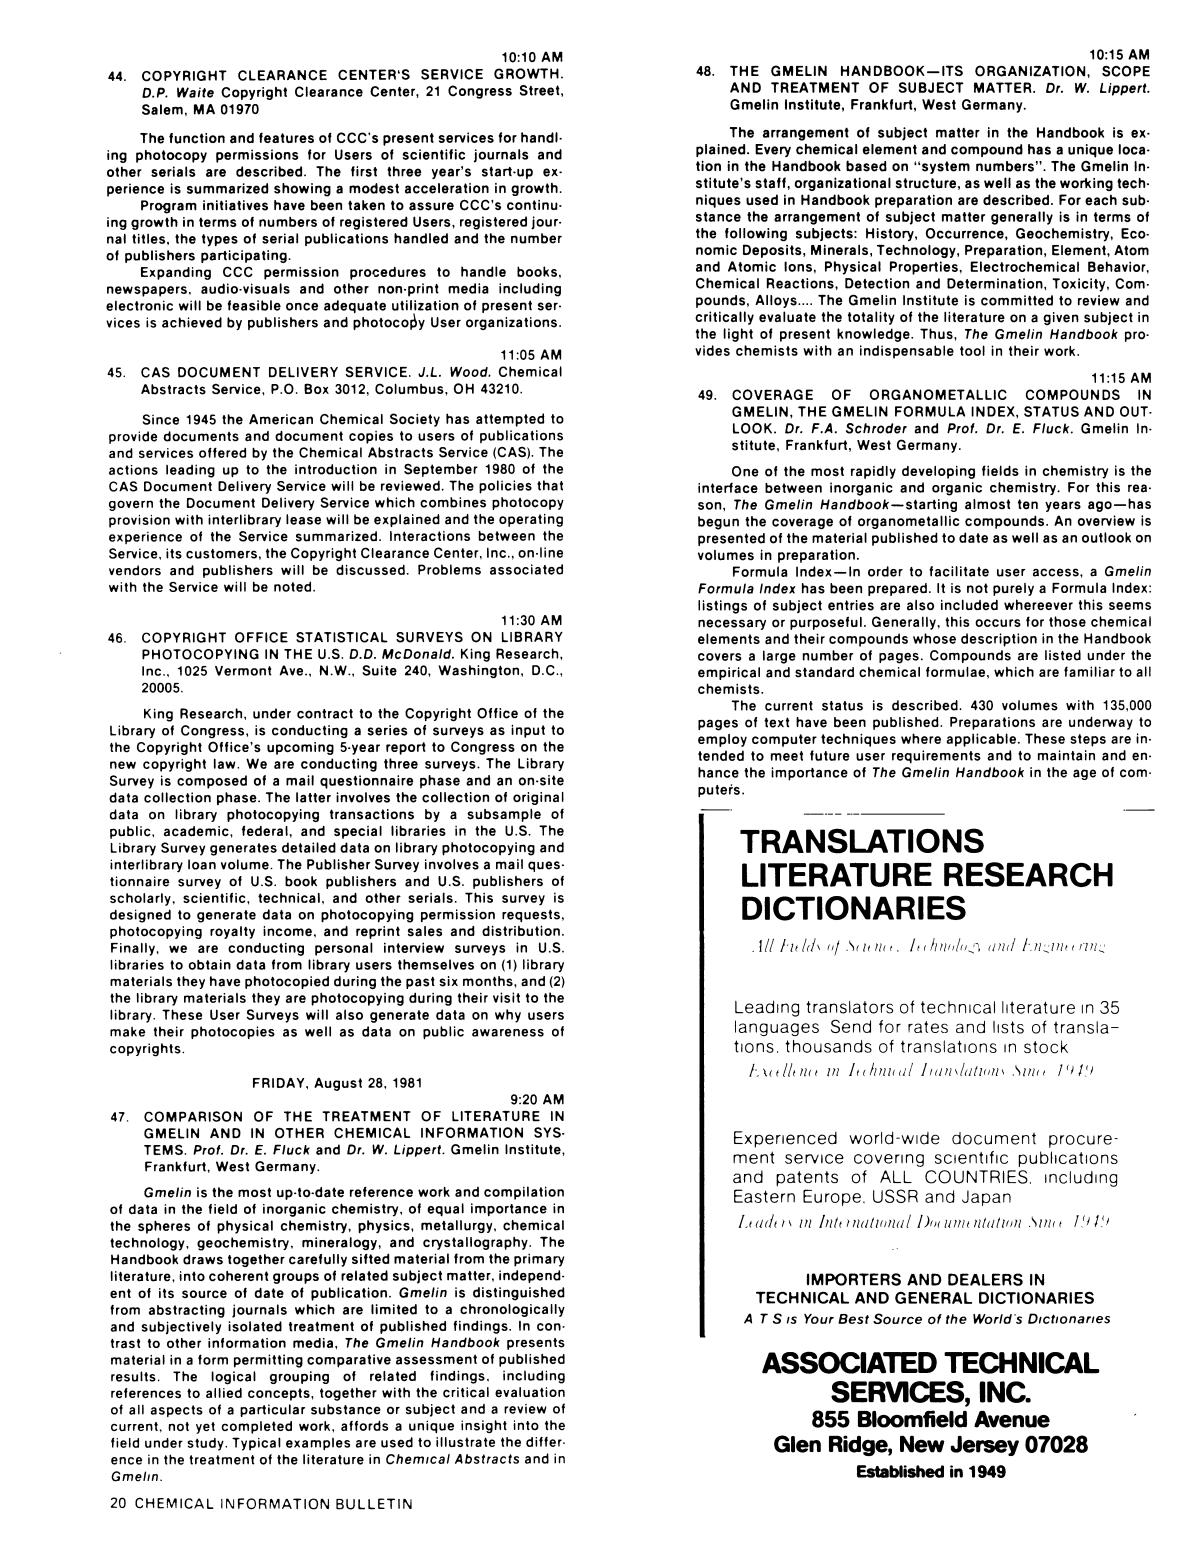 Chemical Information Bulletin, Volume 33, Number 2, Summer 1981
                                                
                                                    20
                                                